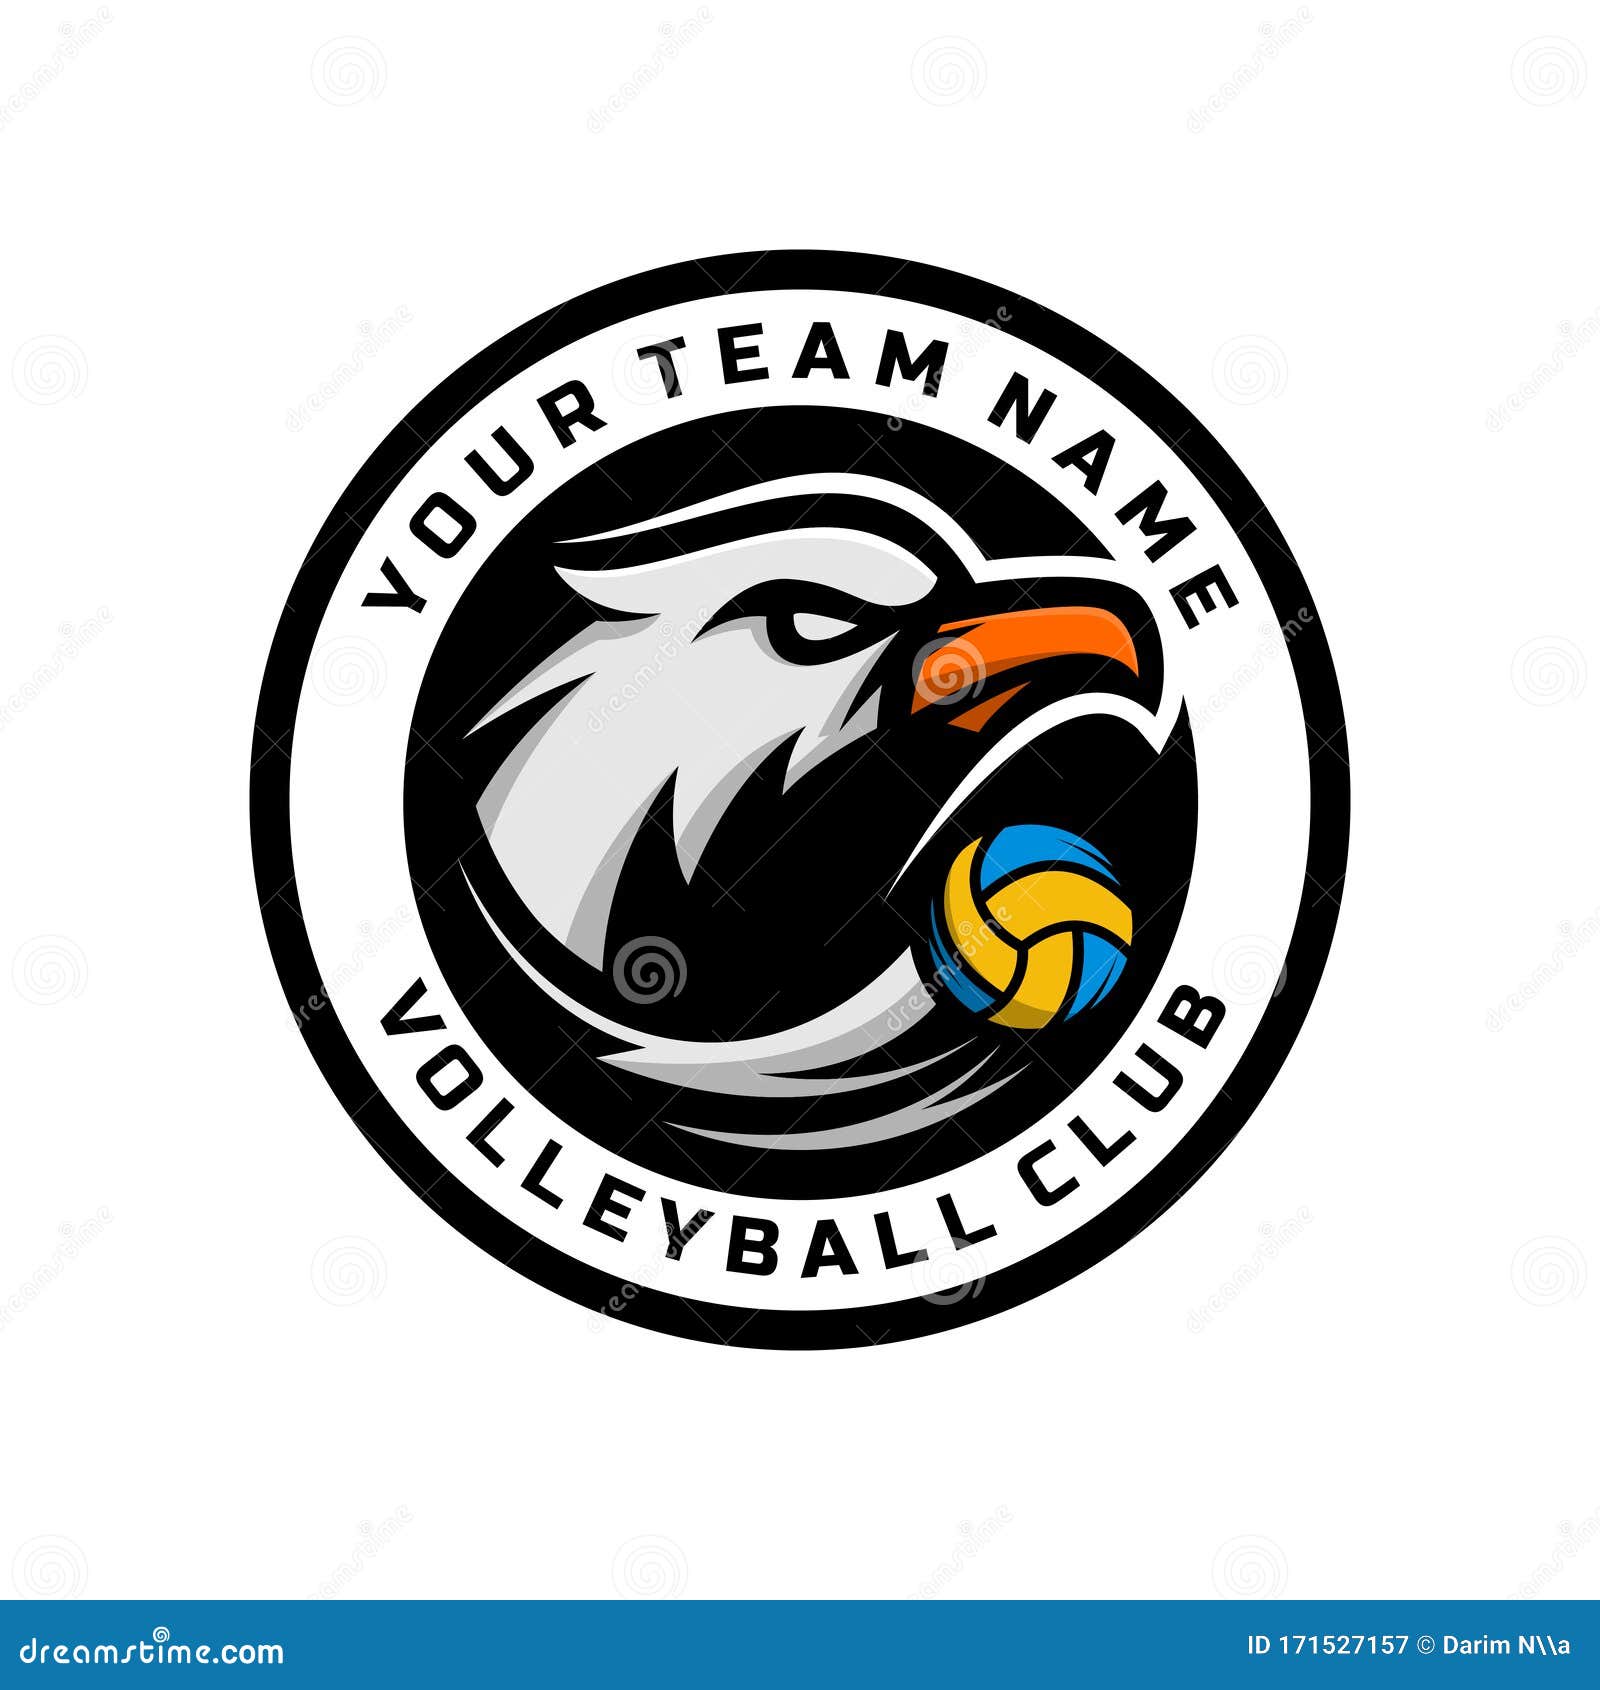 Volleyball Team Logo Design Stock Photography | CartoonDealer.com ...